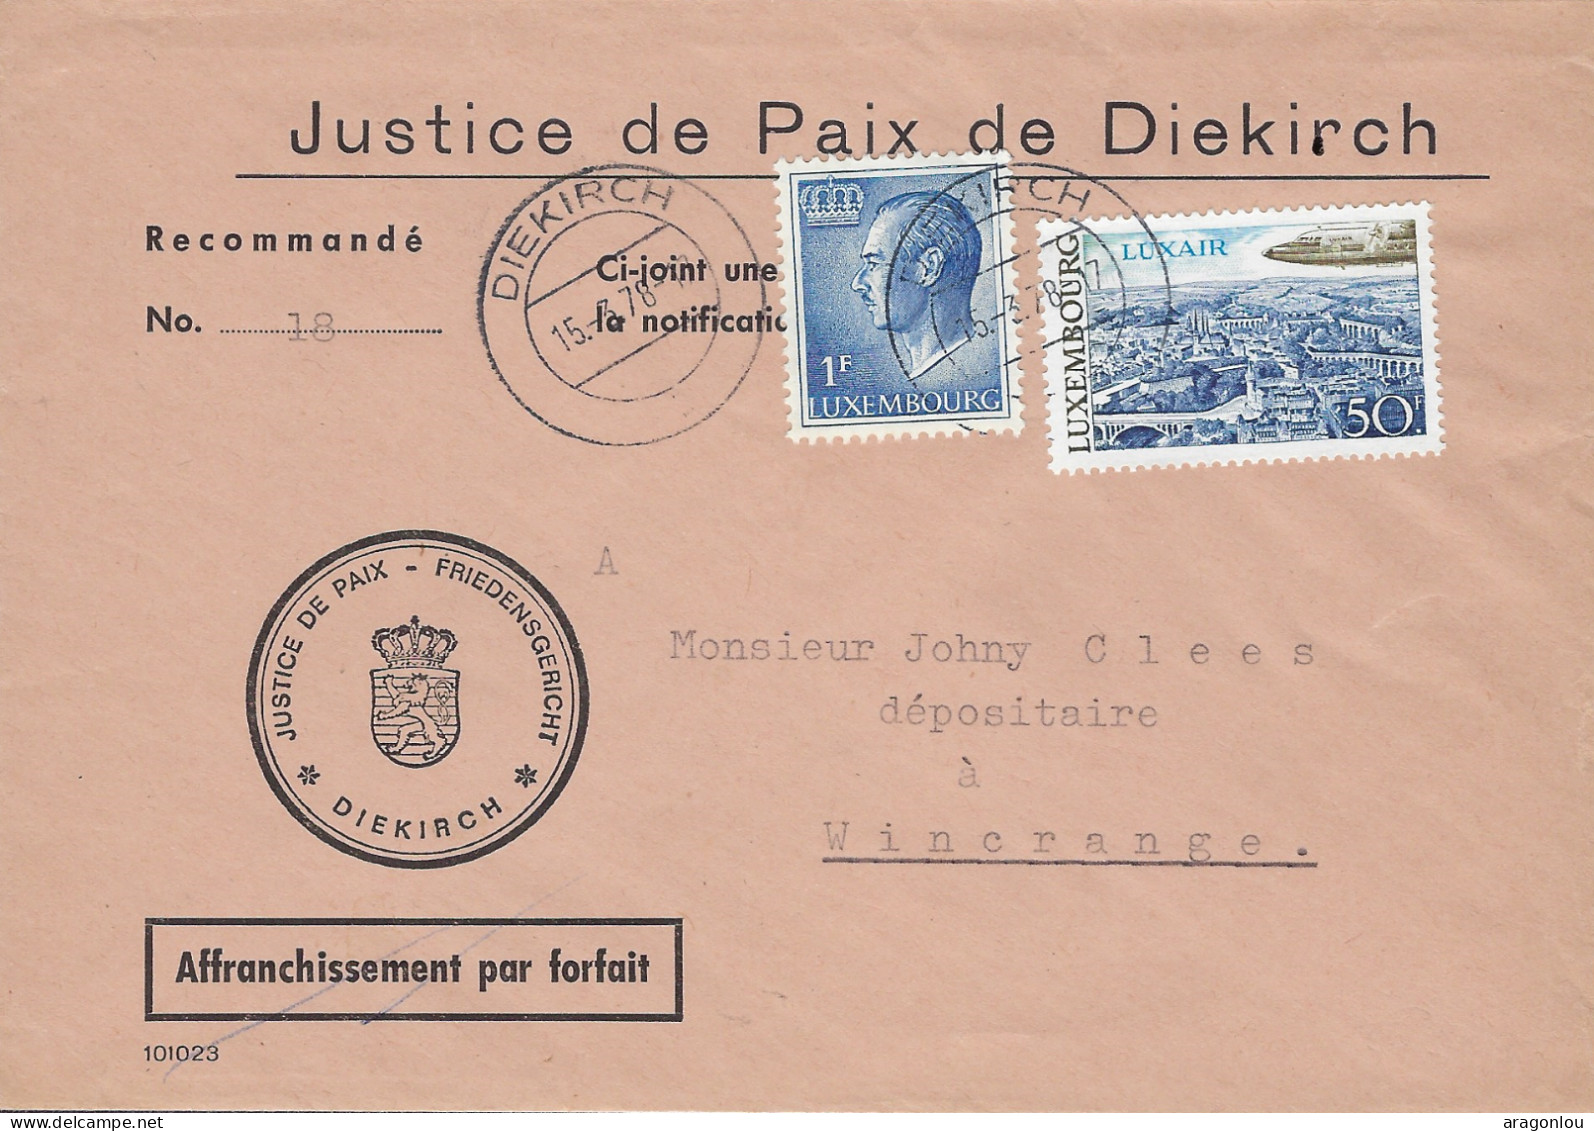 Luxembourg - Luxemburg - Lettre      1978  -  JUSTICE DE PAIX DE DIEKIRCH - Briefe U. Dokumente